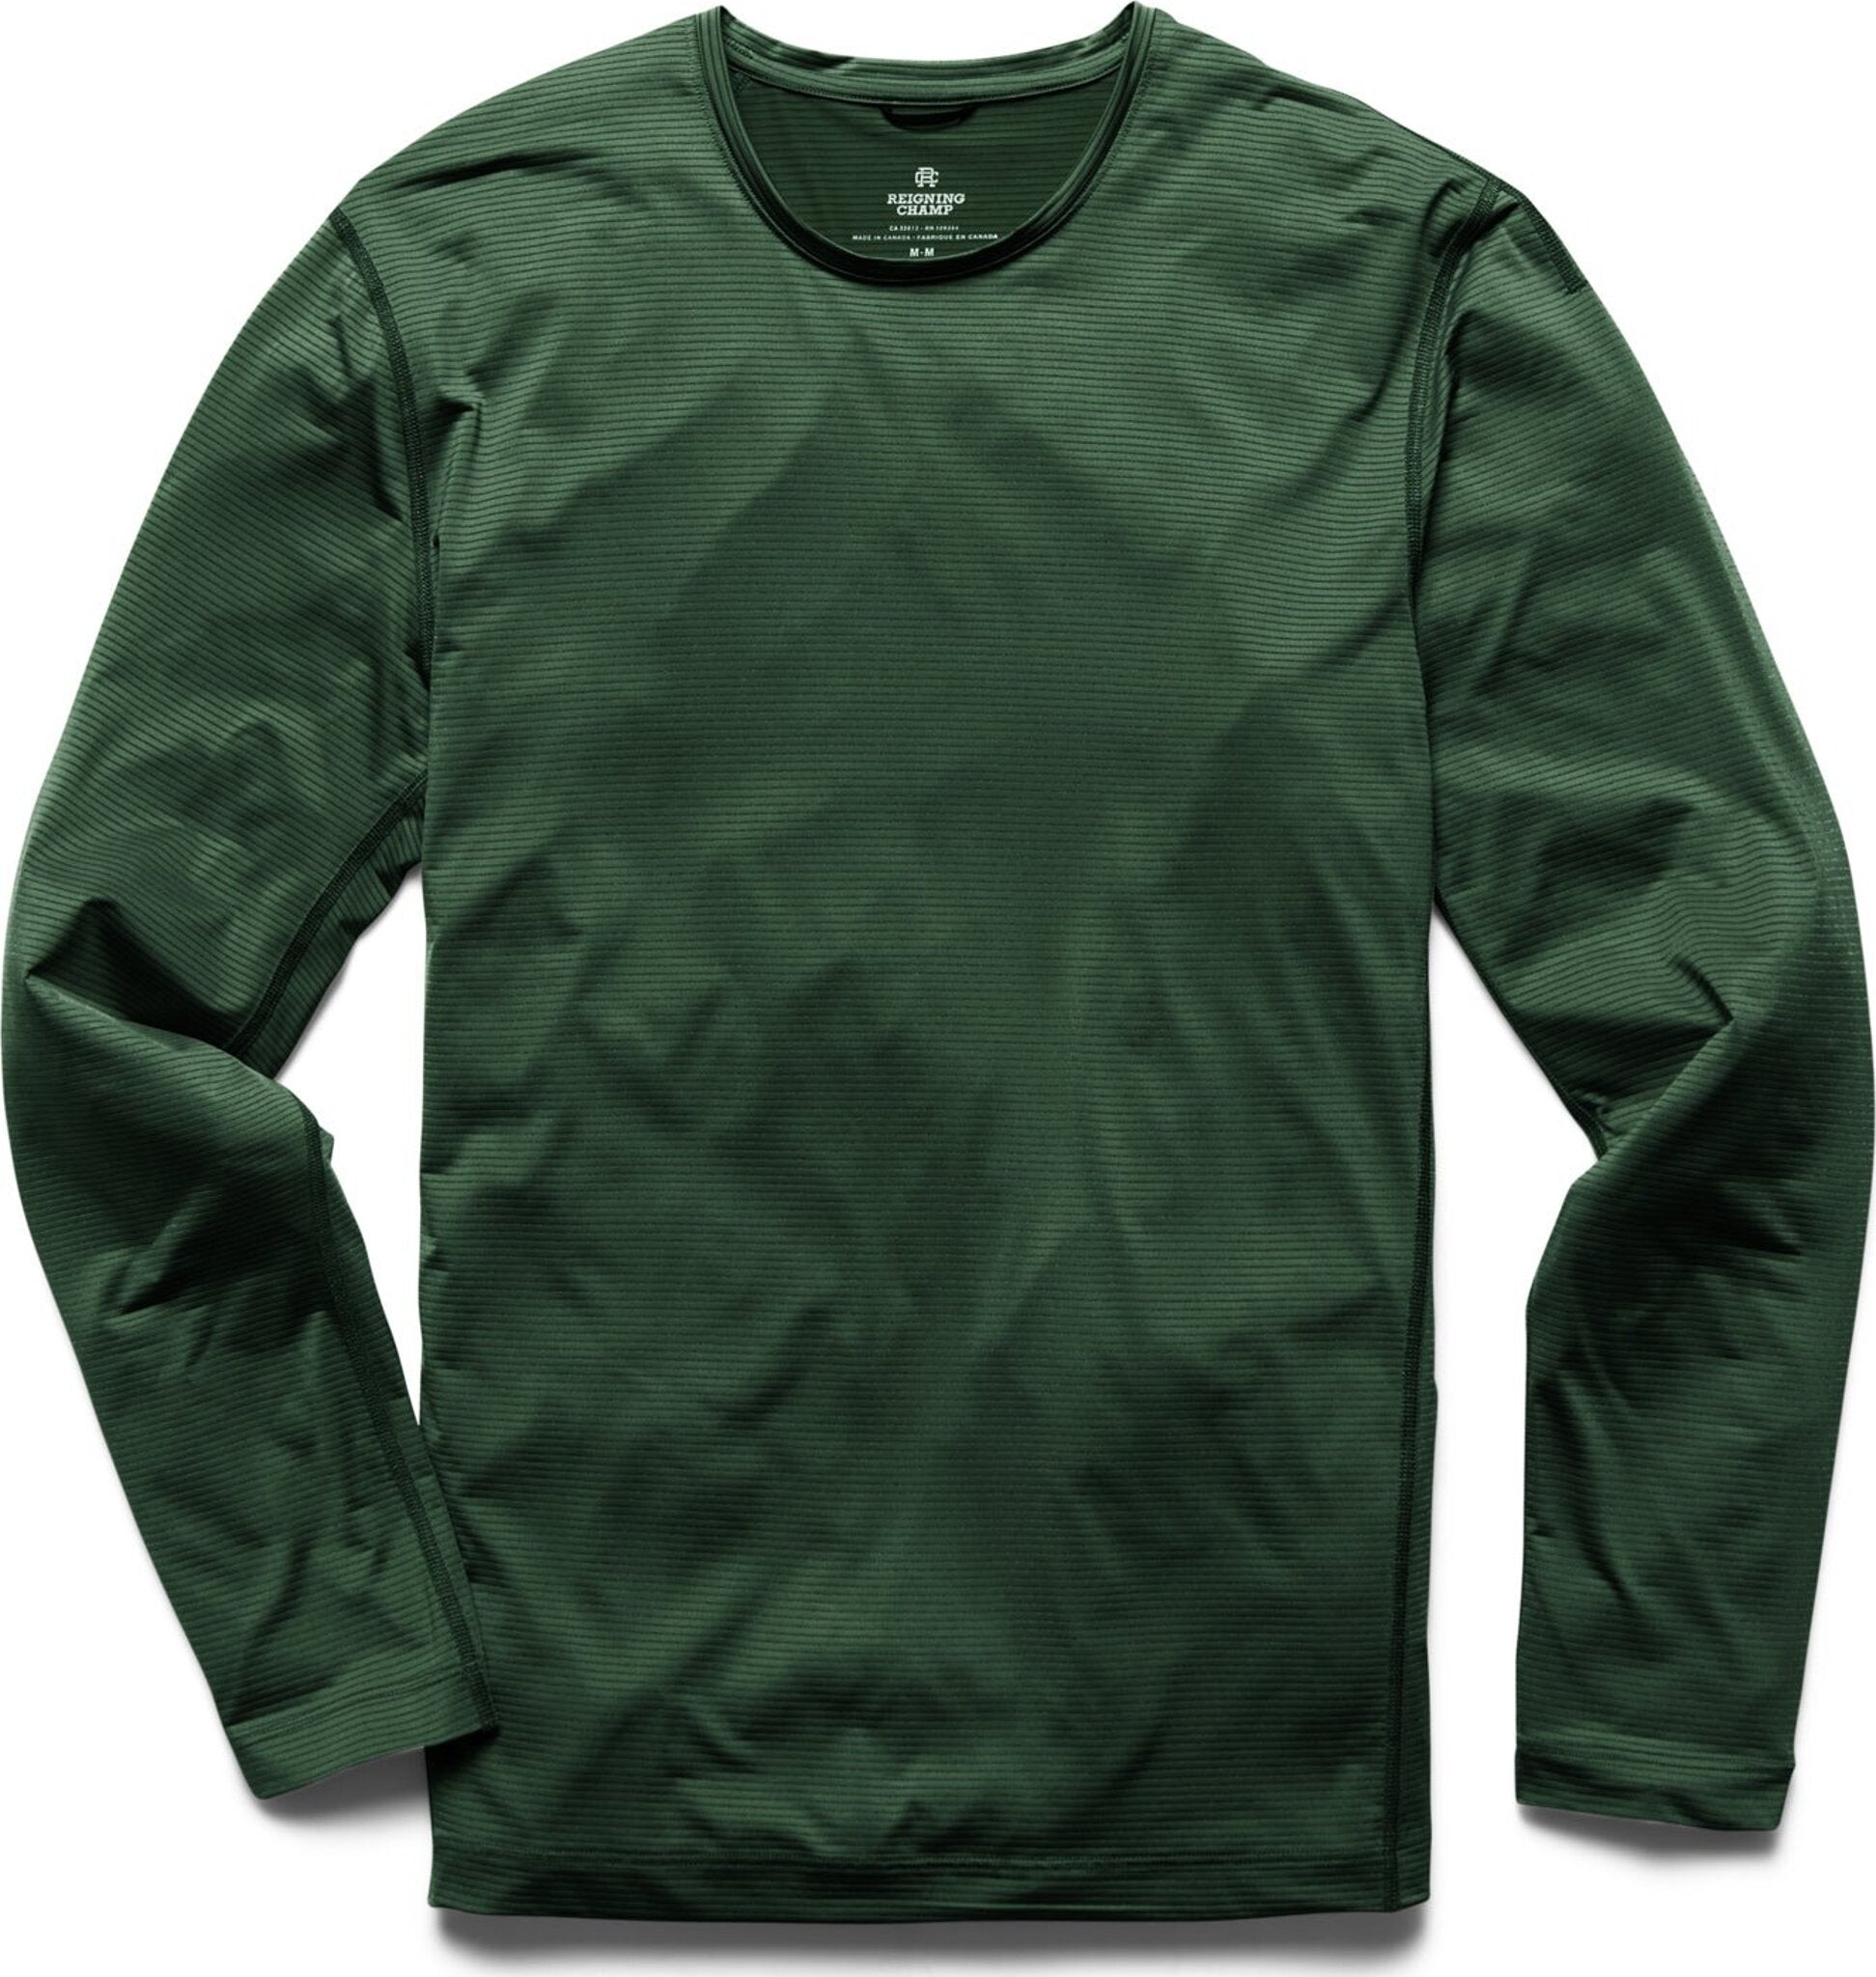 Reel Legends Green Athletic Long Sleeve Shirts for Men